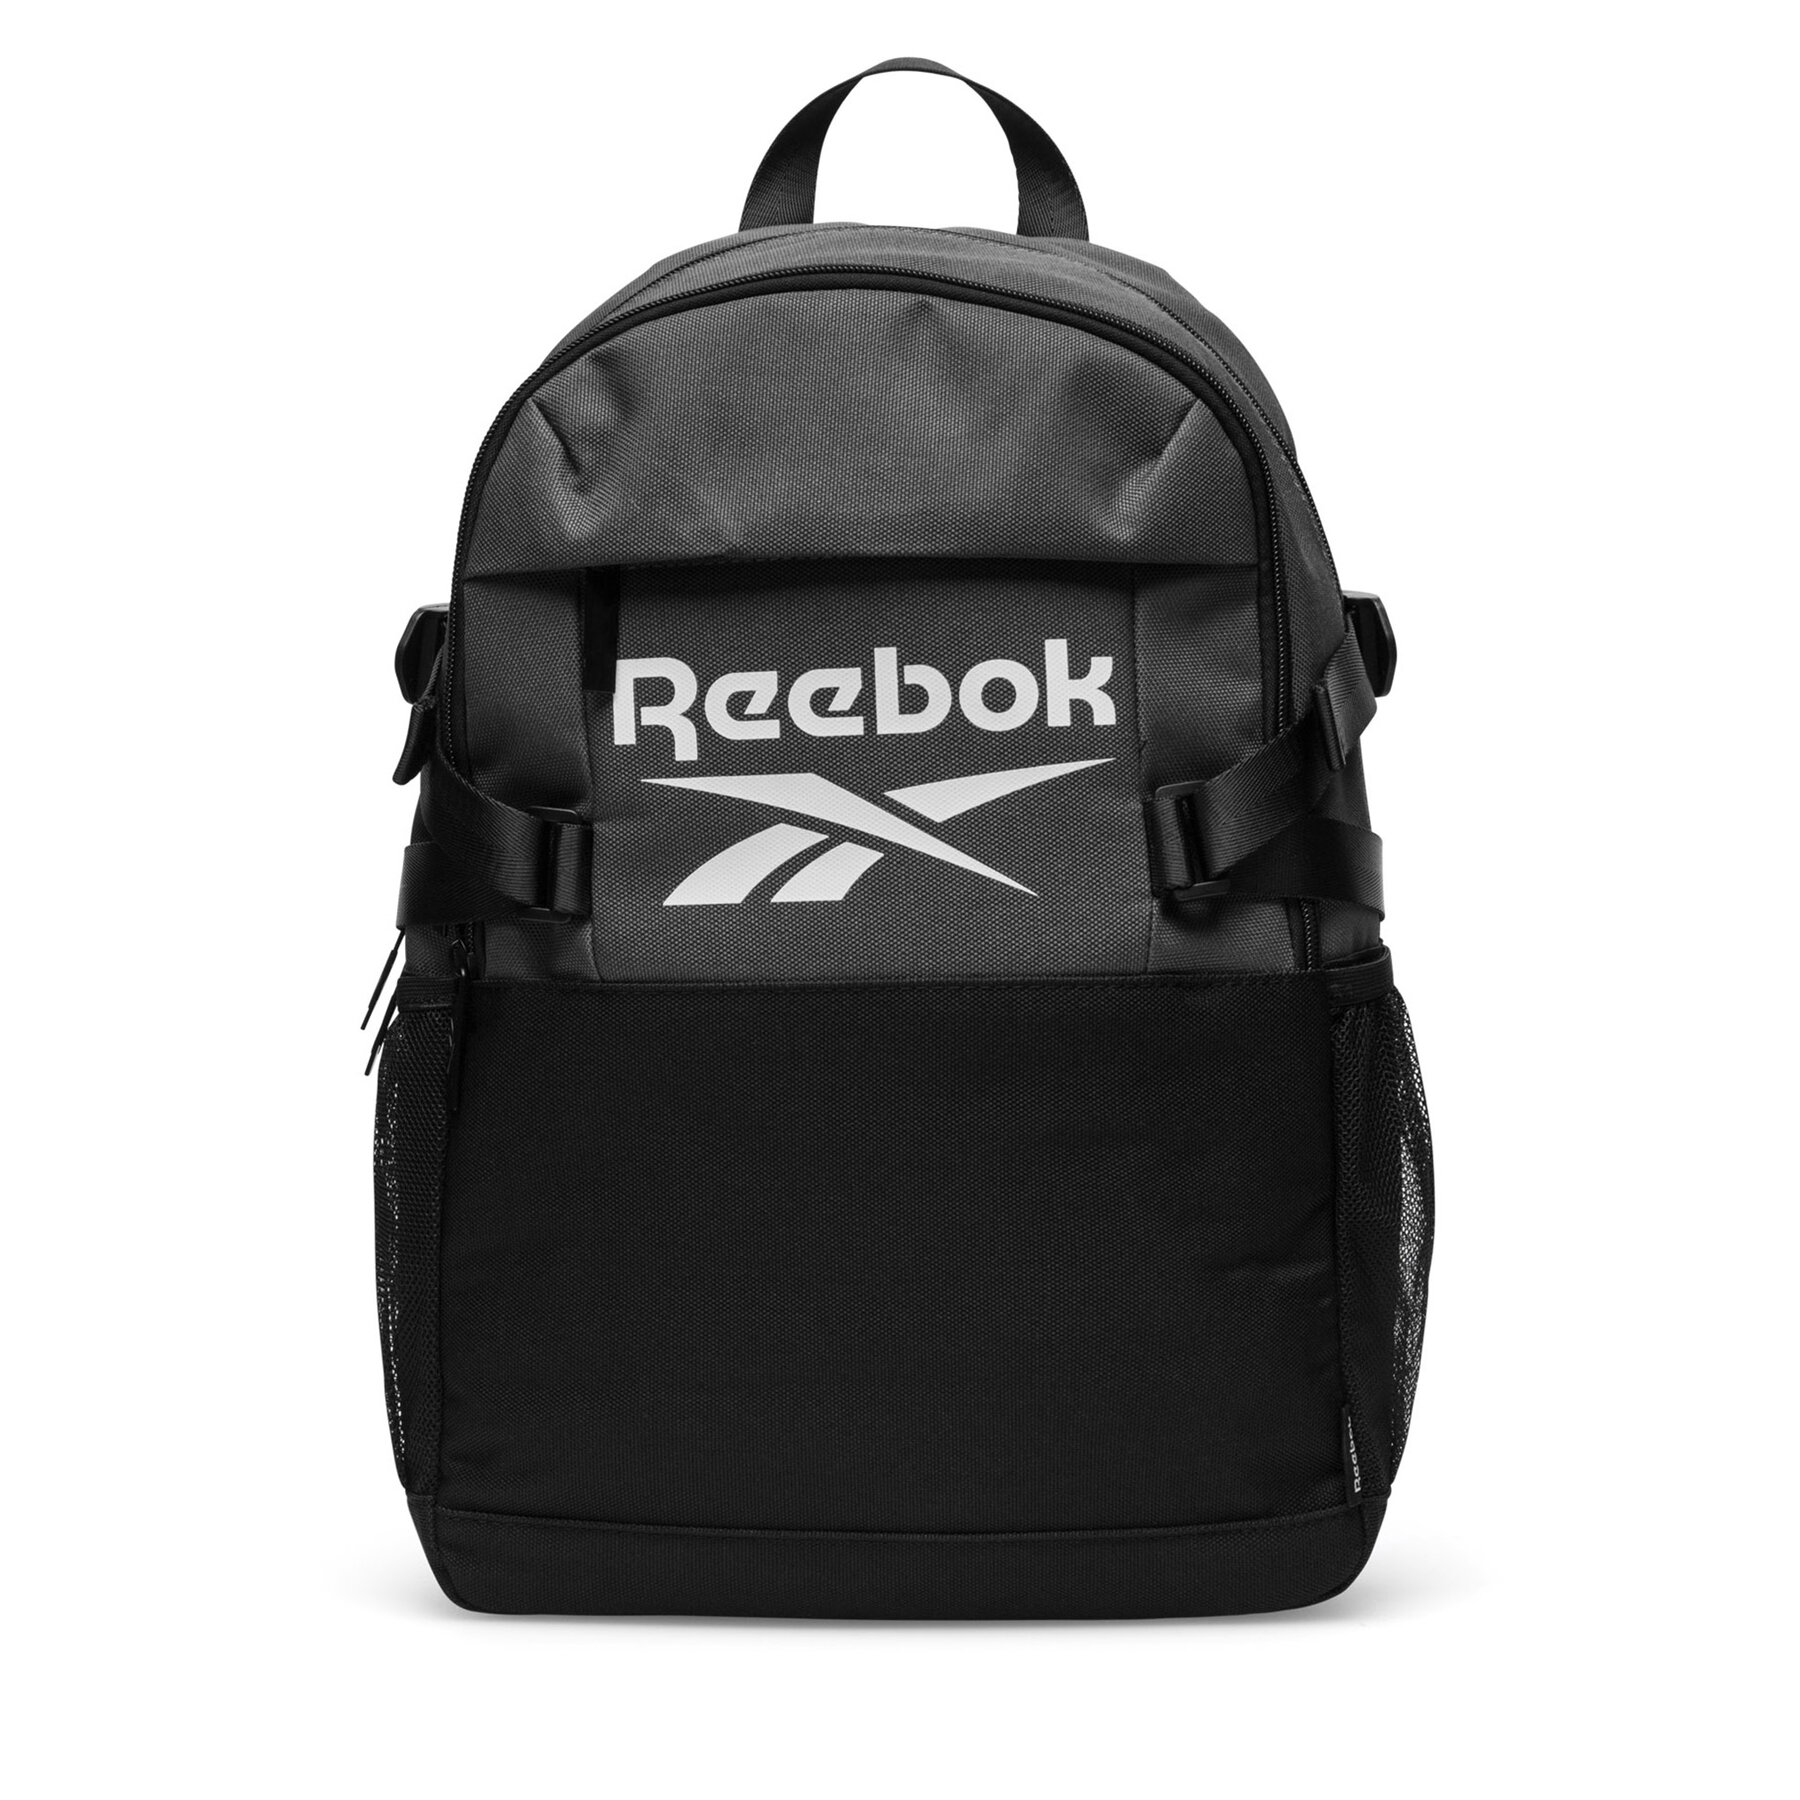 Rucksack Reebok RBK-025-CCC-05 Grau von Reebok